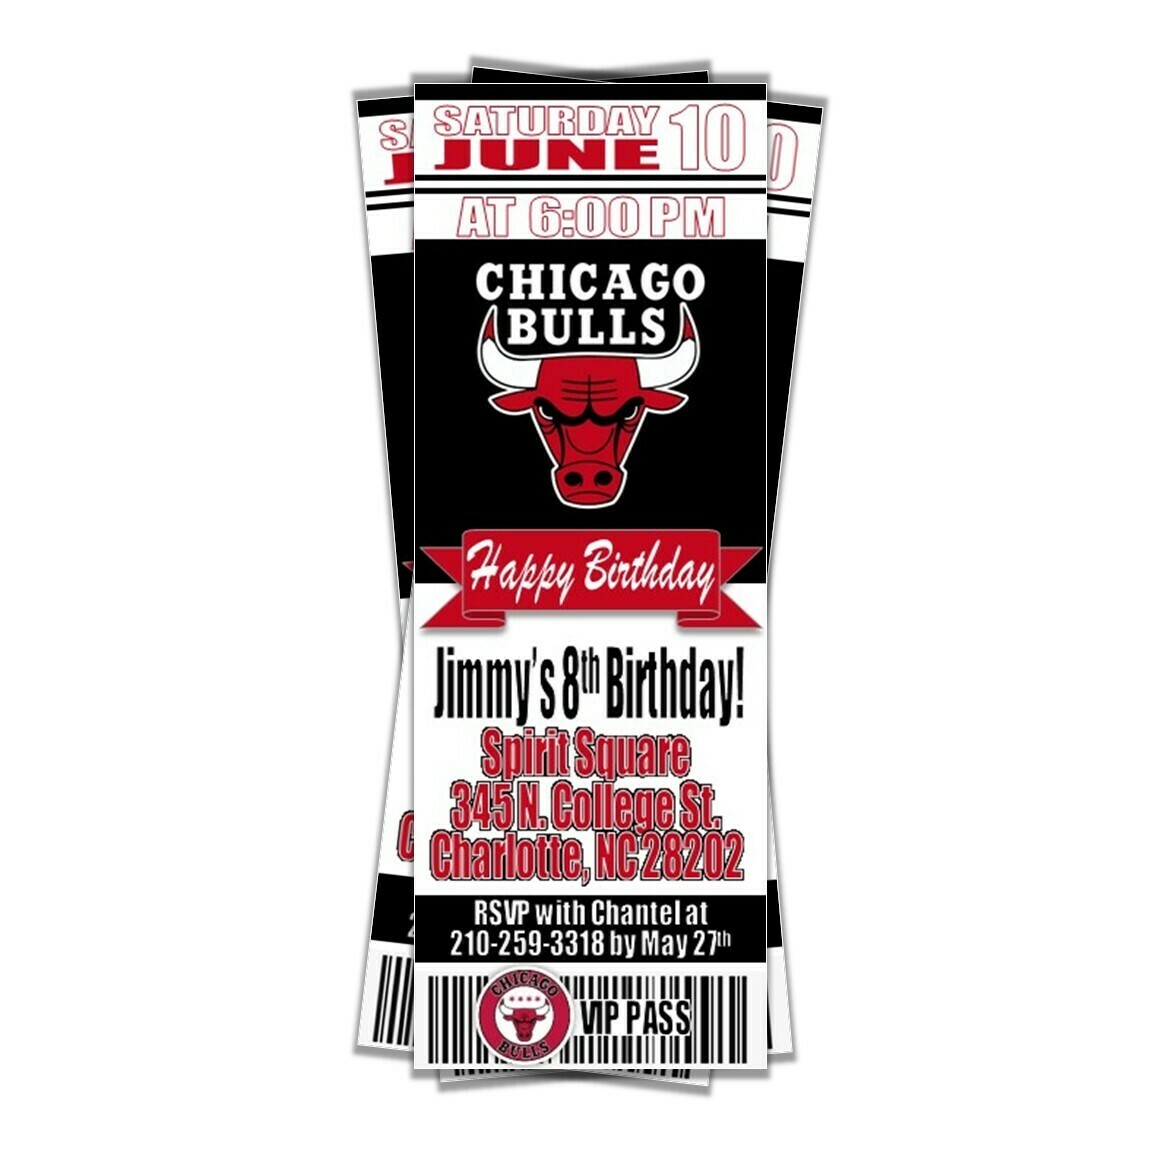 Chicago Bulls NBA Basketball Birthday Invitation Ticket Style